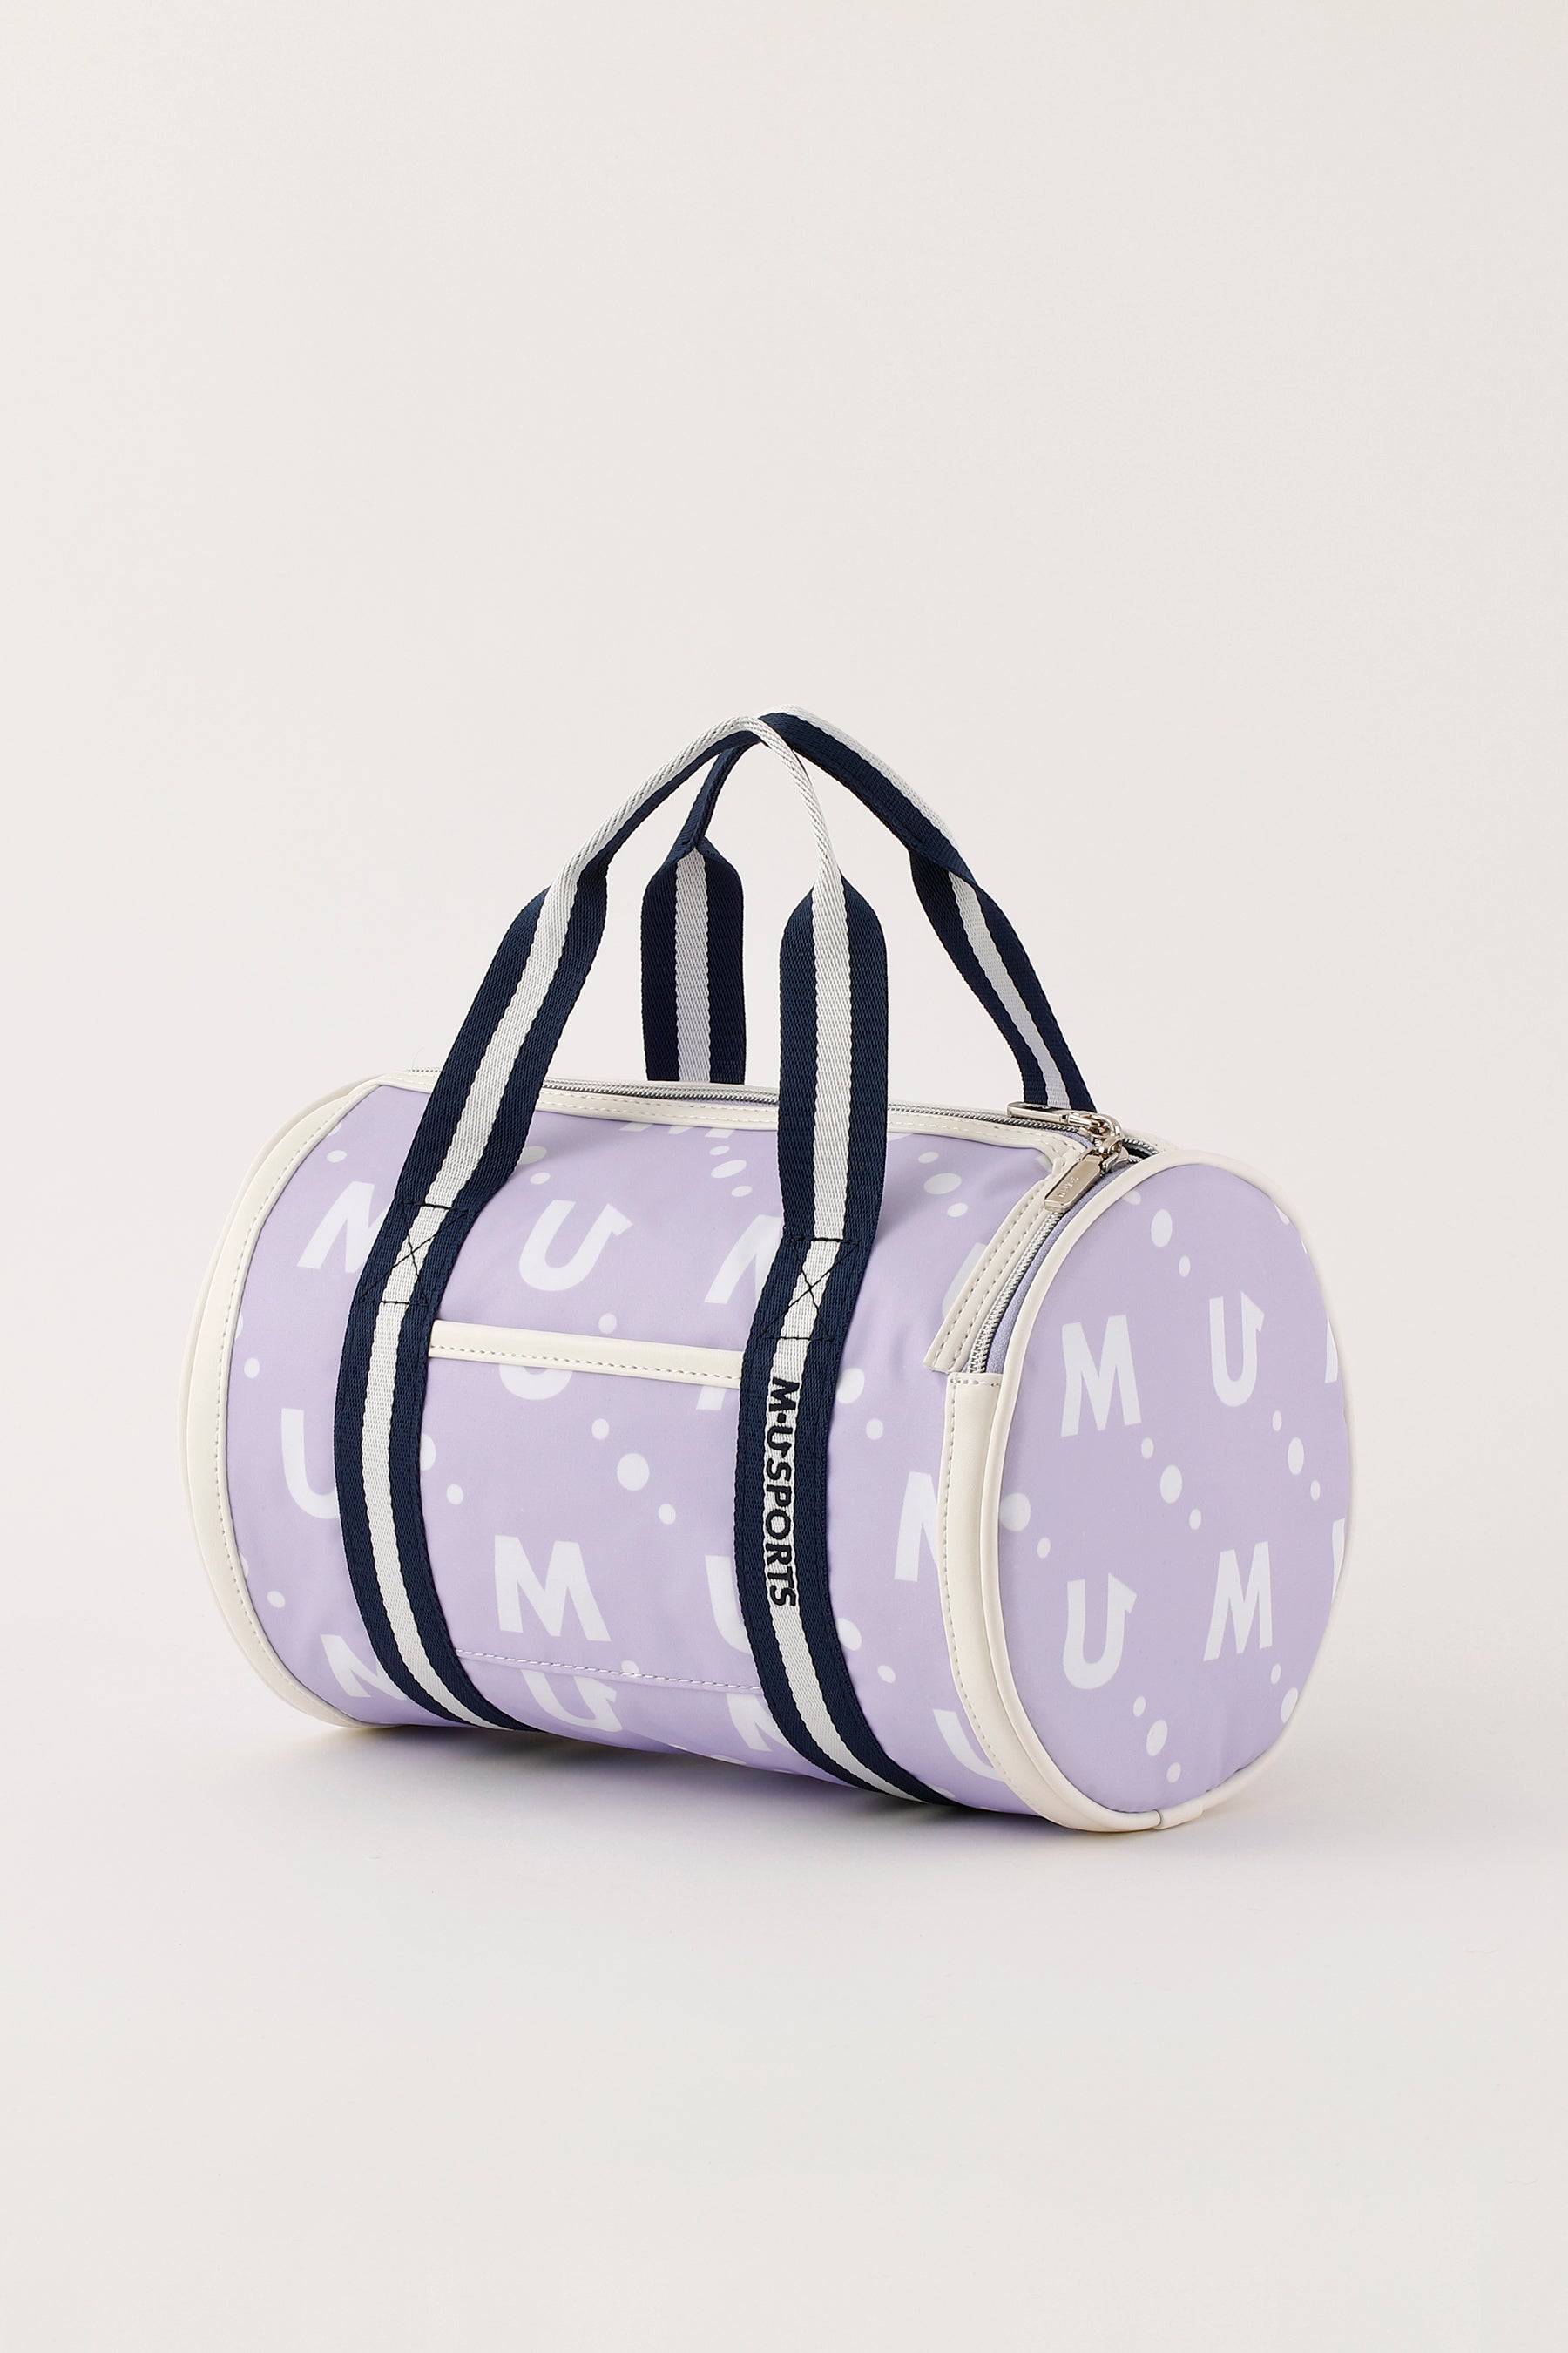 Water-repellent monogram all-over pattern logo cooler bag (703Q1016)